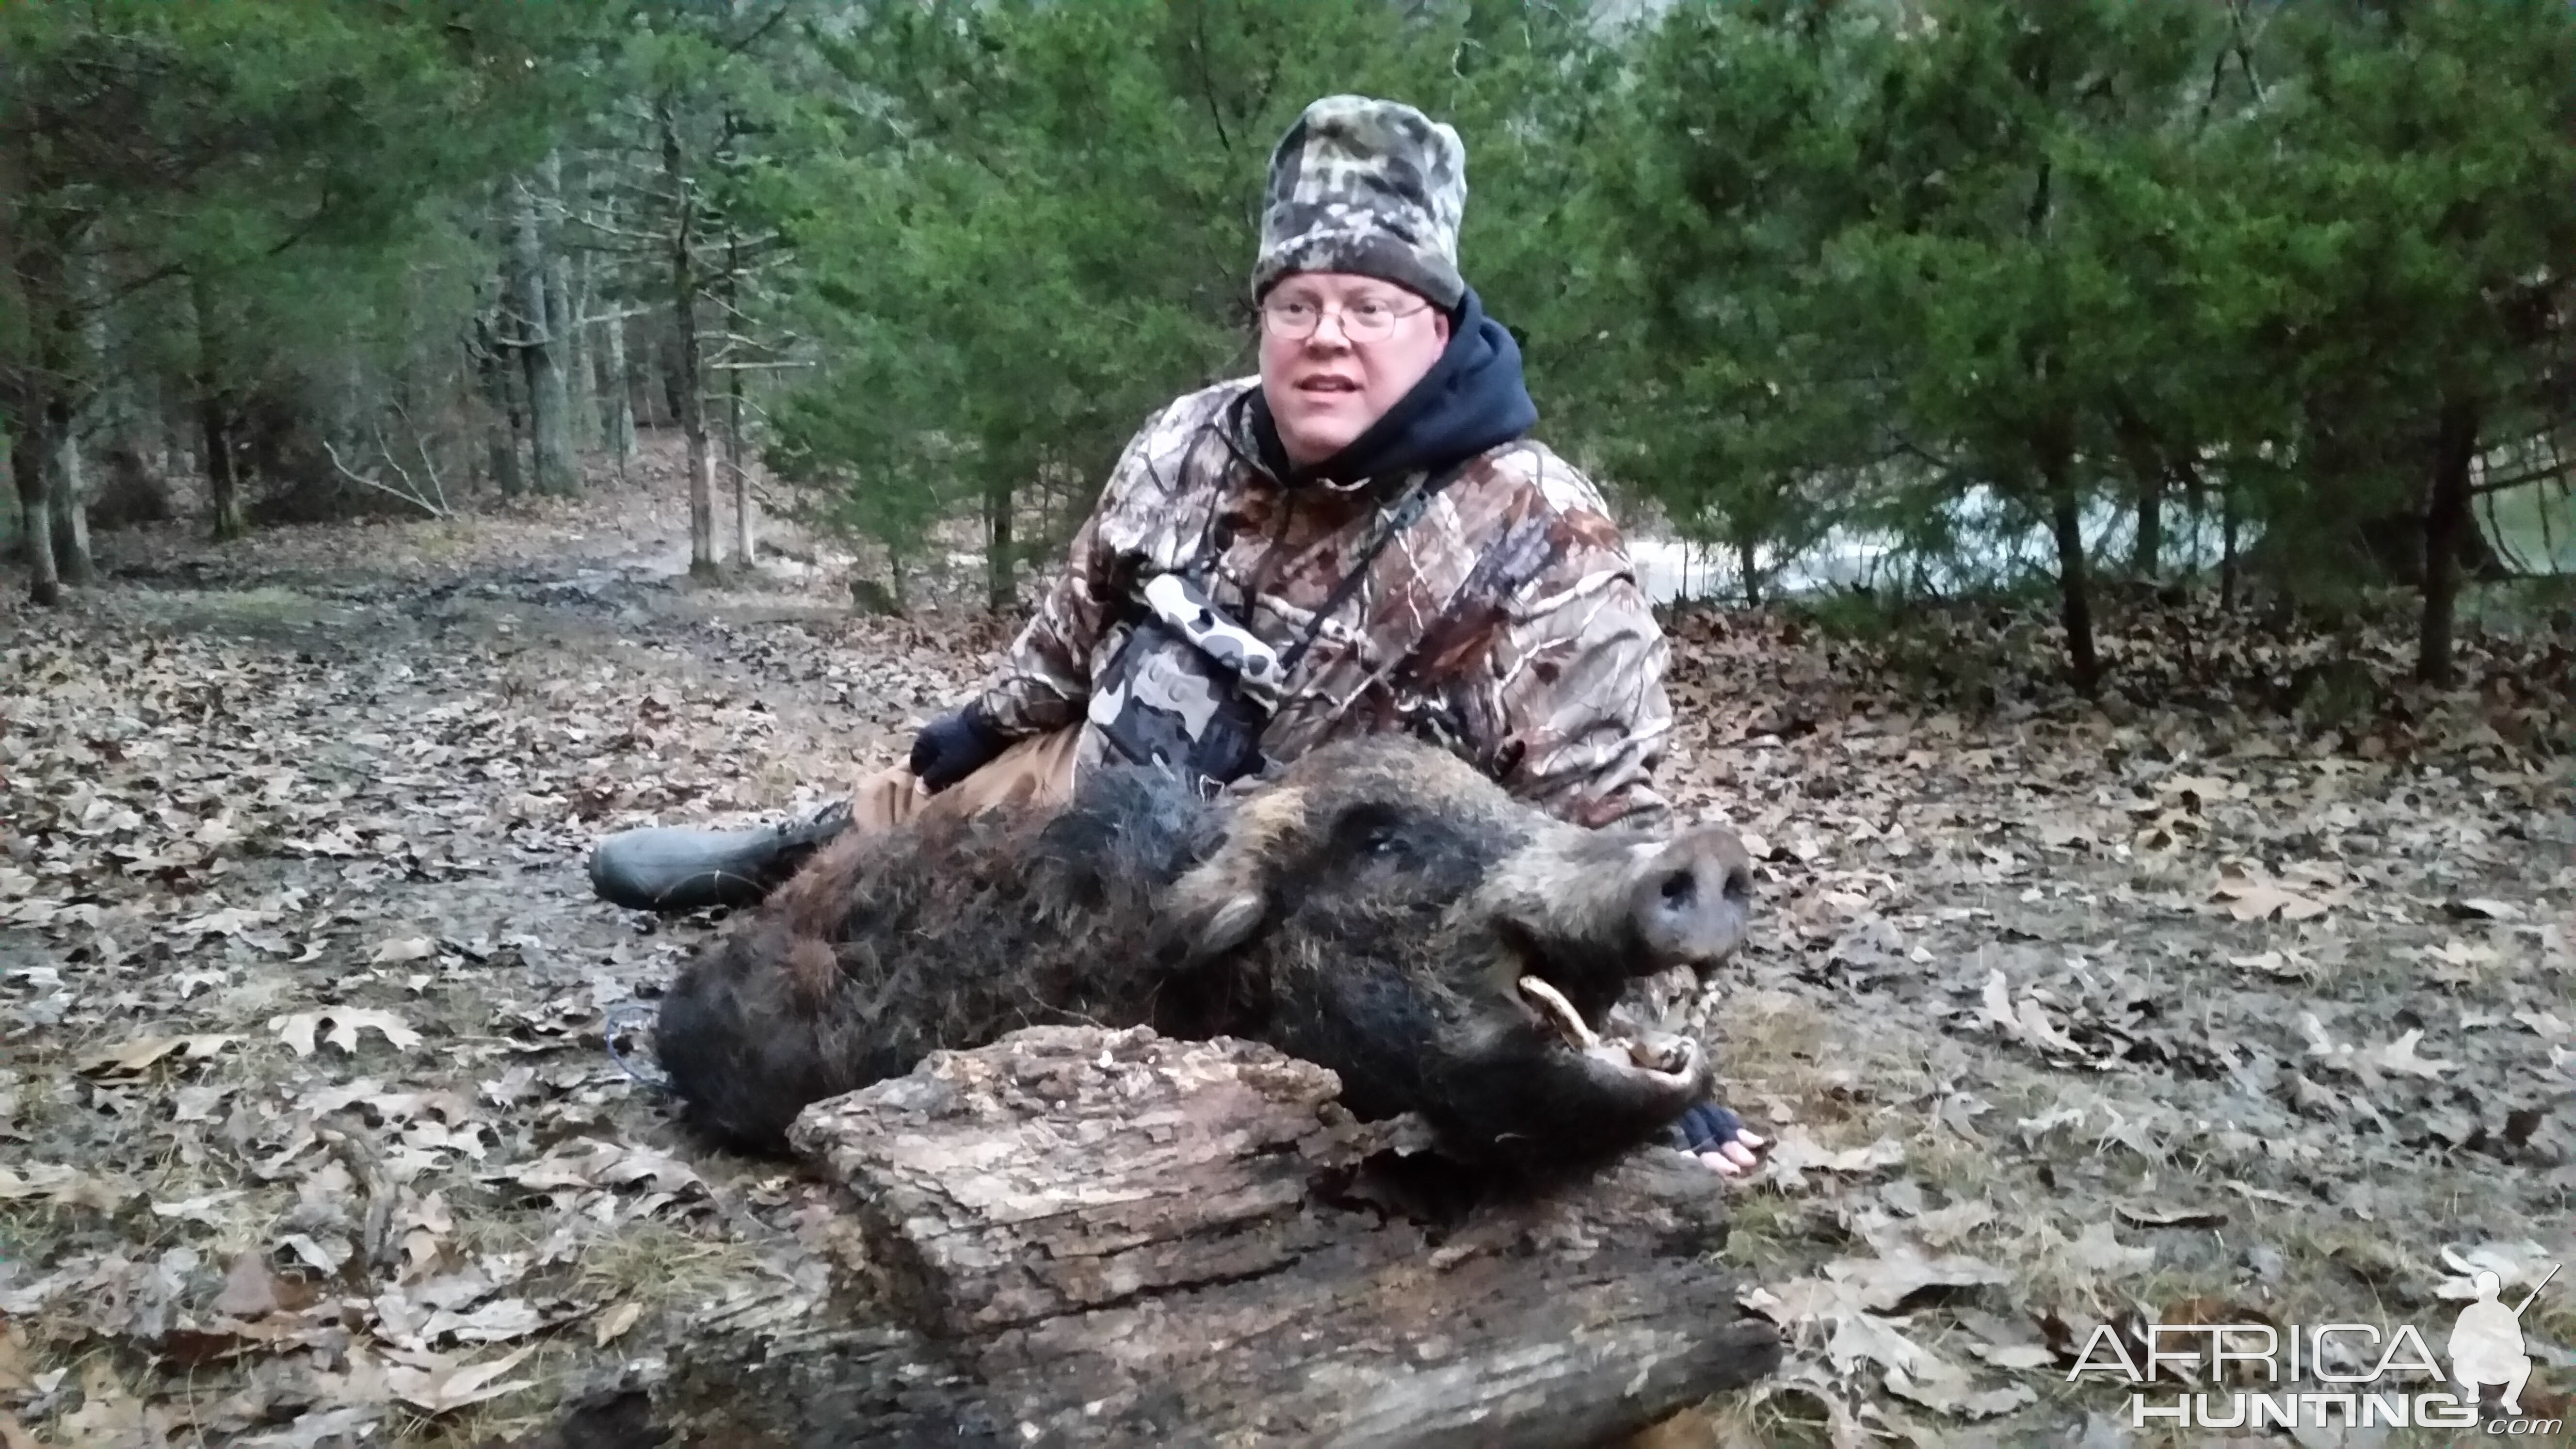 USA Hunting Wild Boar